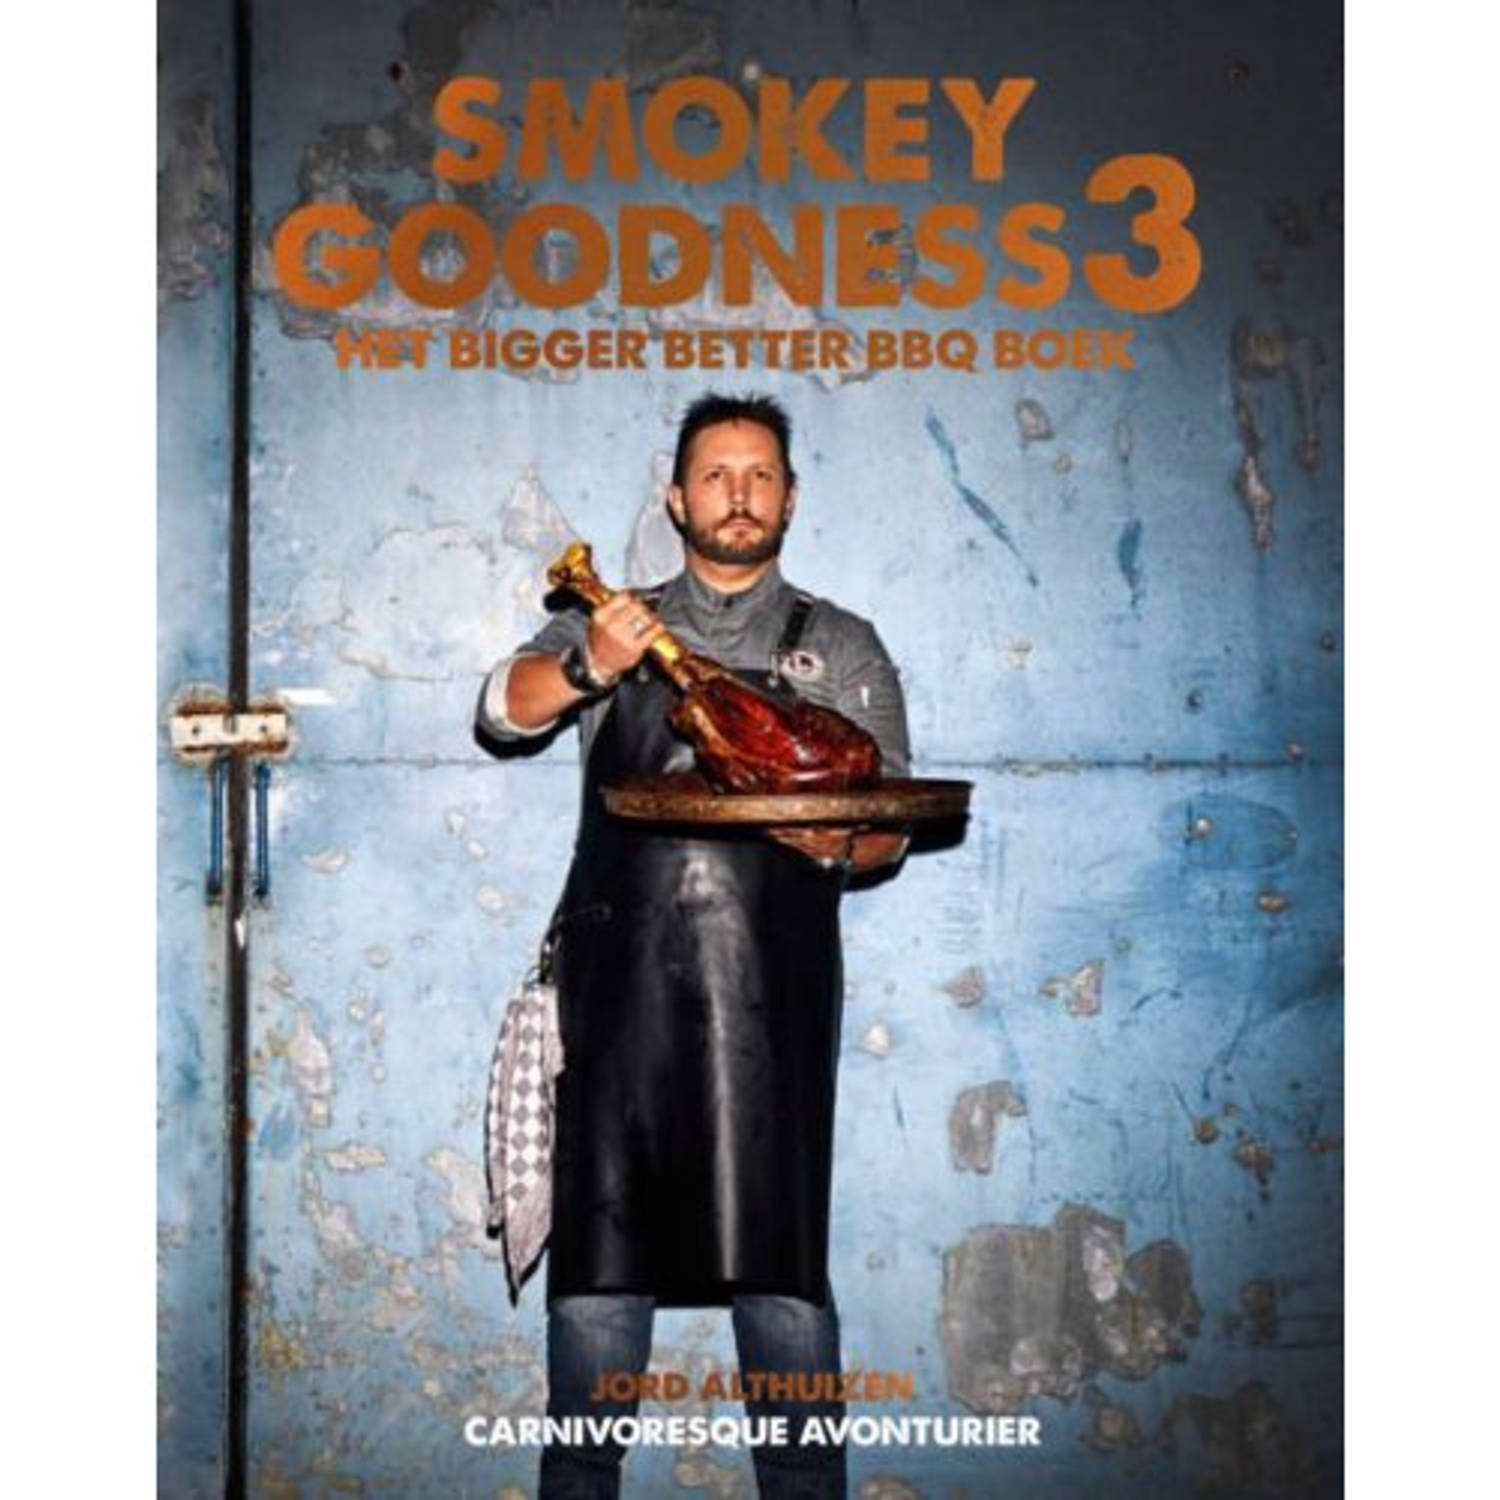 Kosmos Uitgevers Smokey Goodness 3 - Het Bigger, Better BBQ Boek